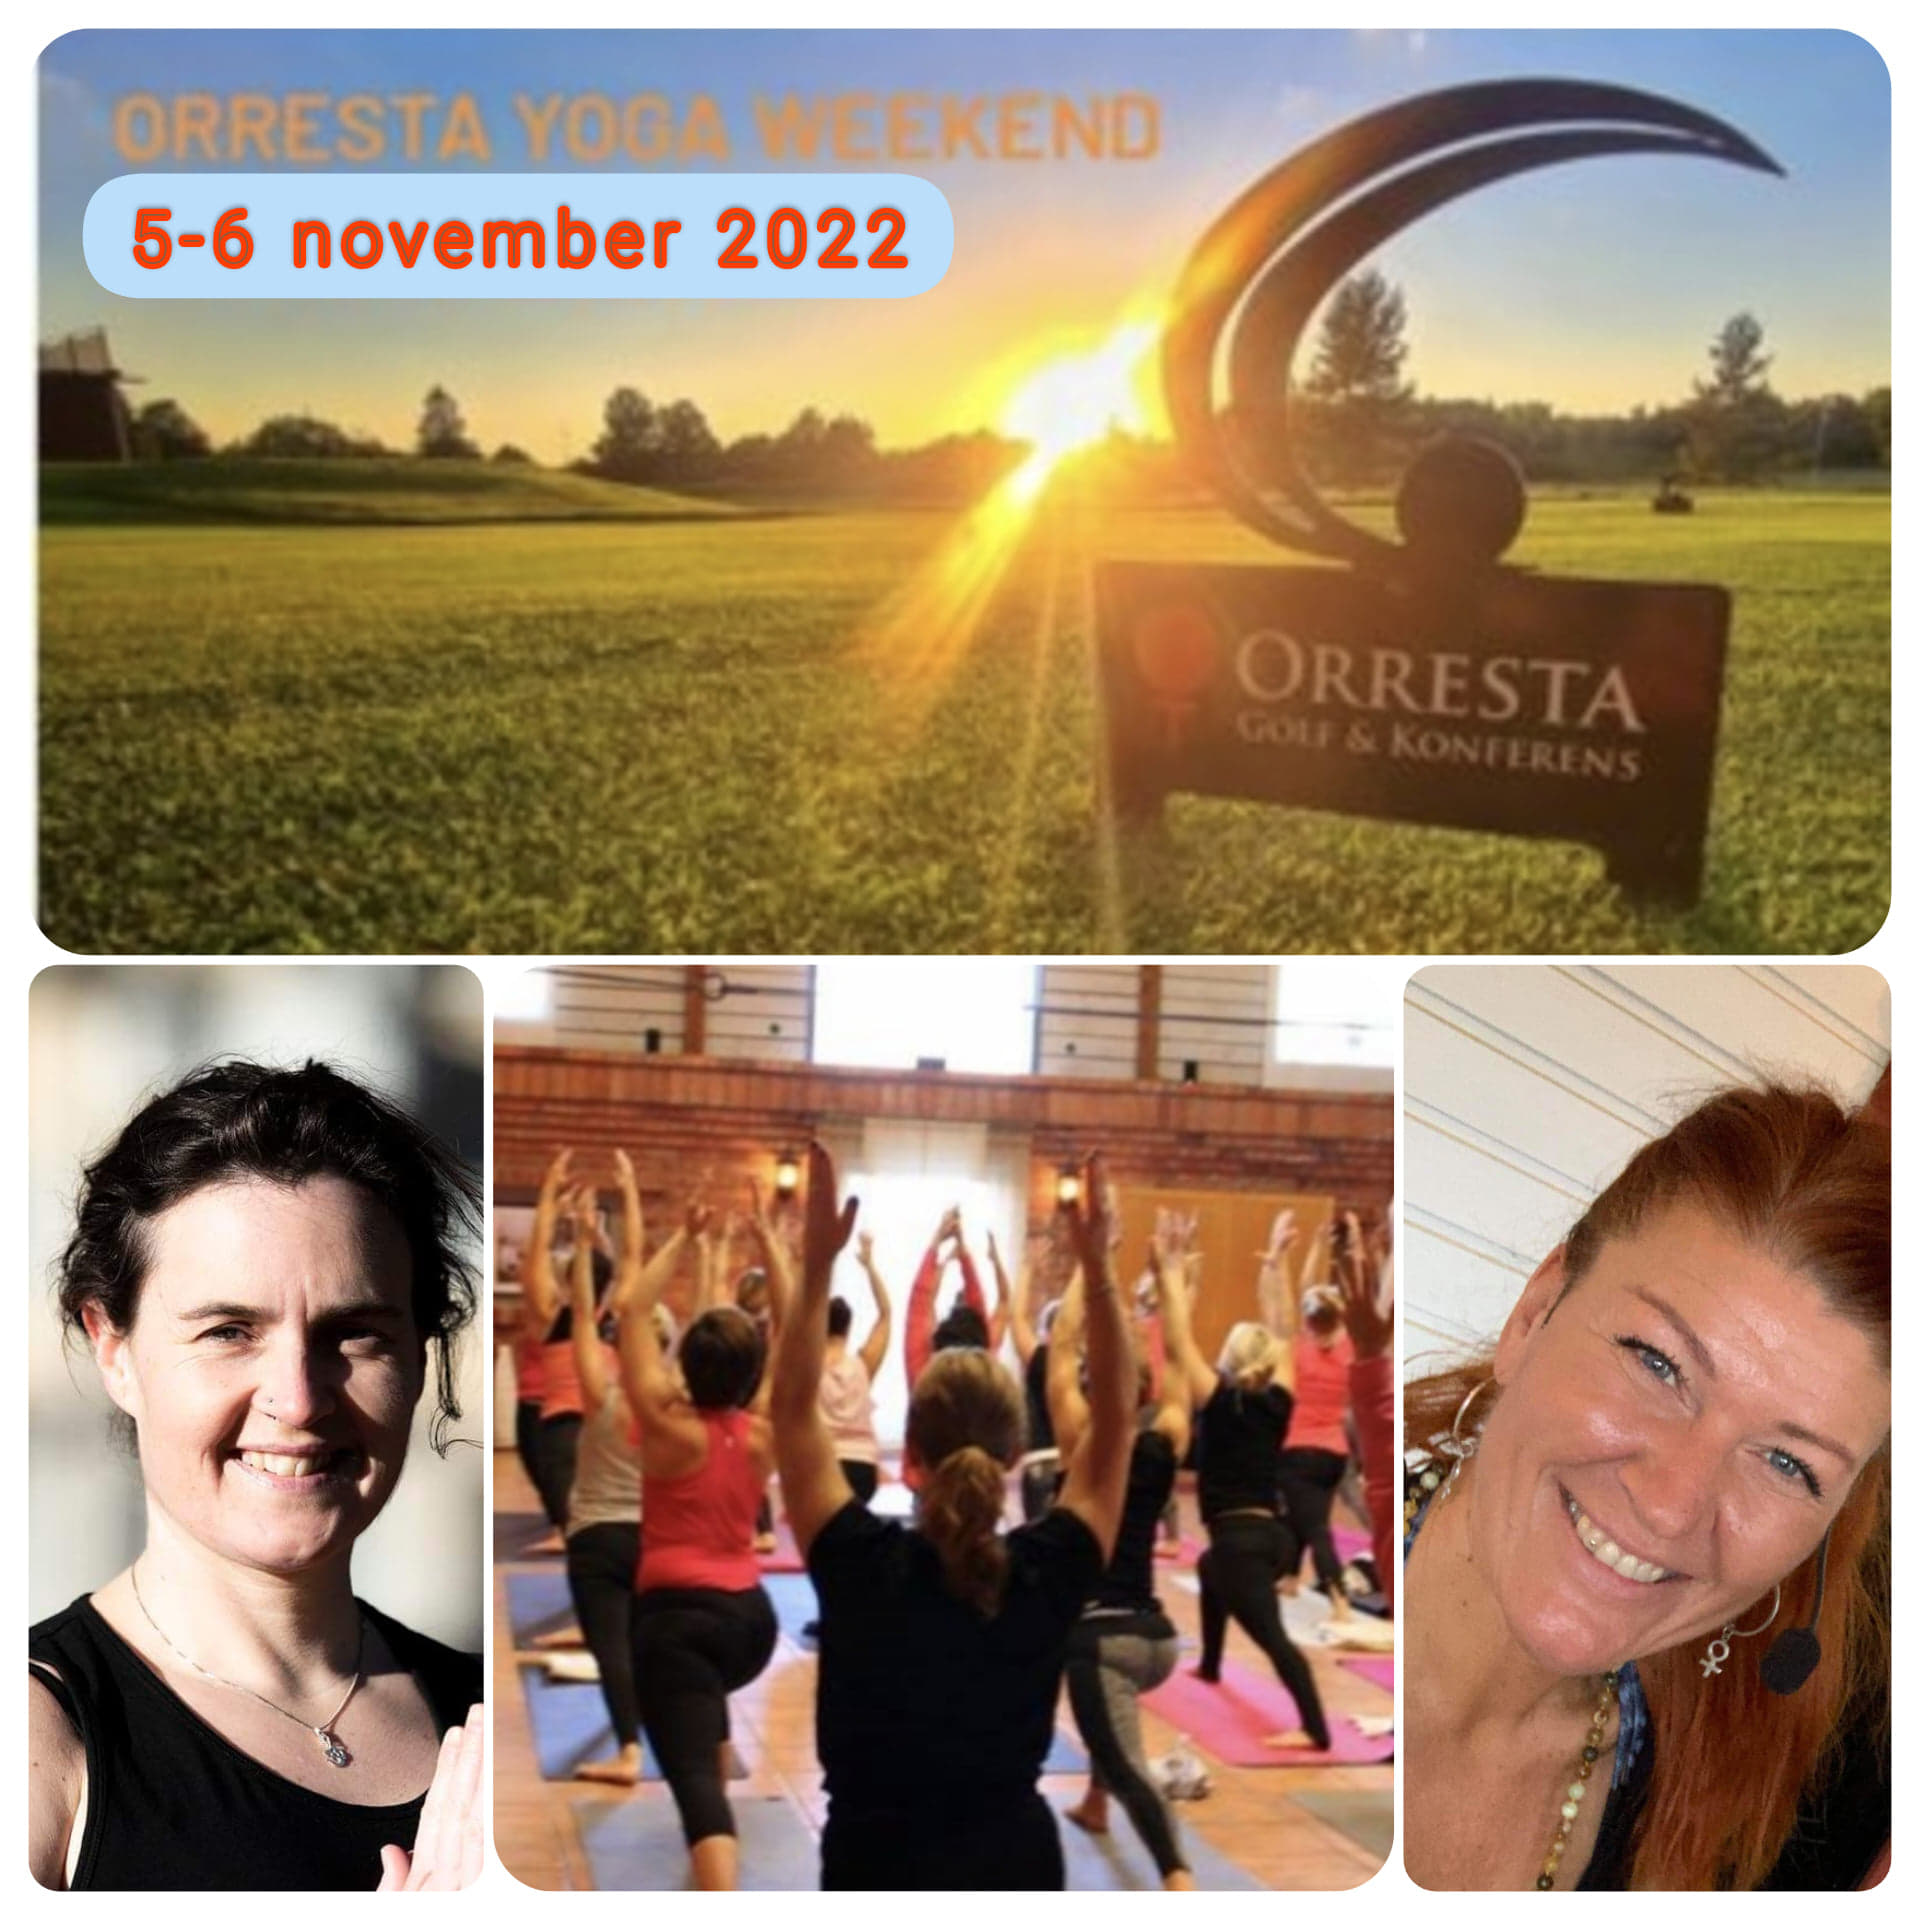 Orresta Yoga Weekend